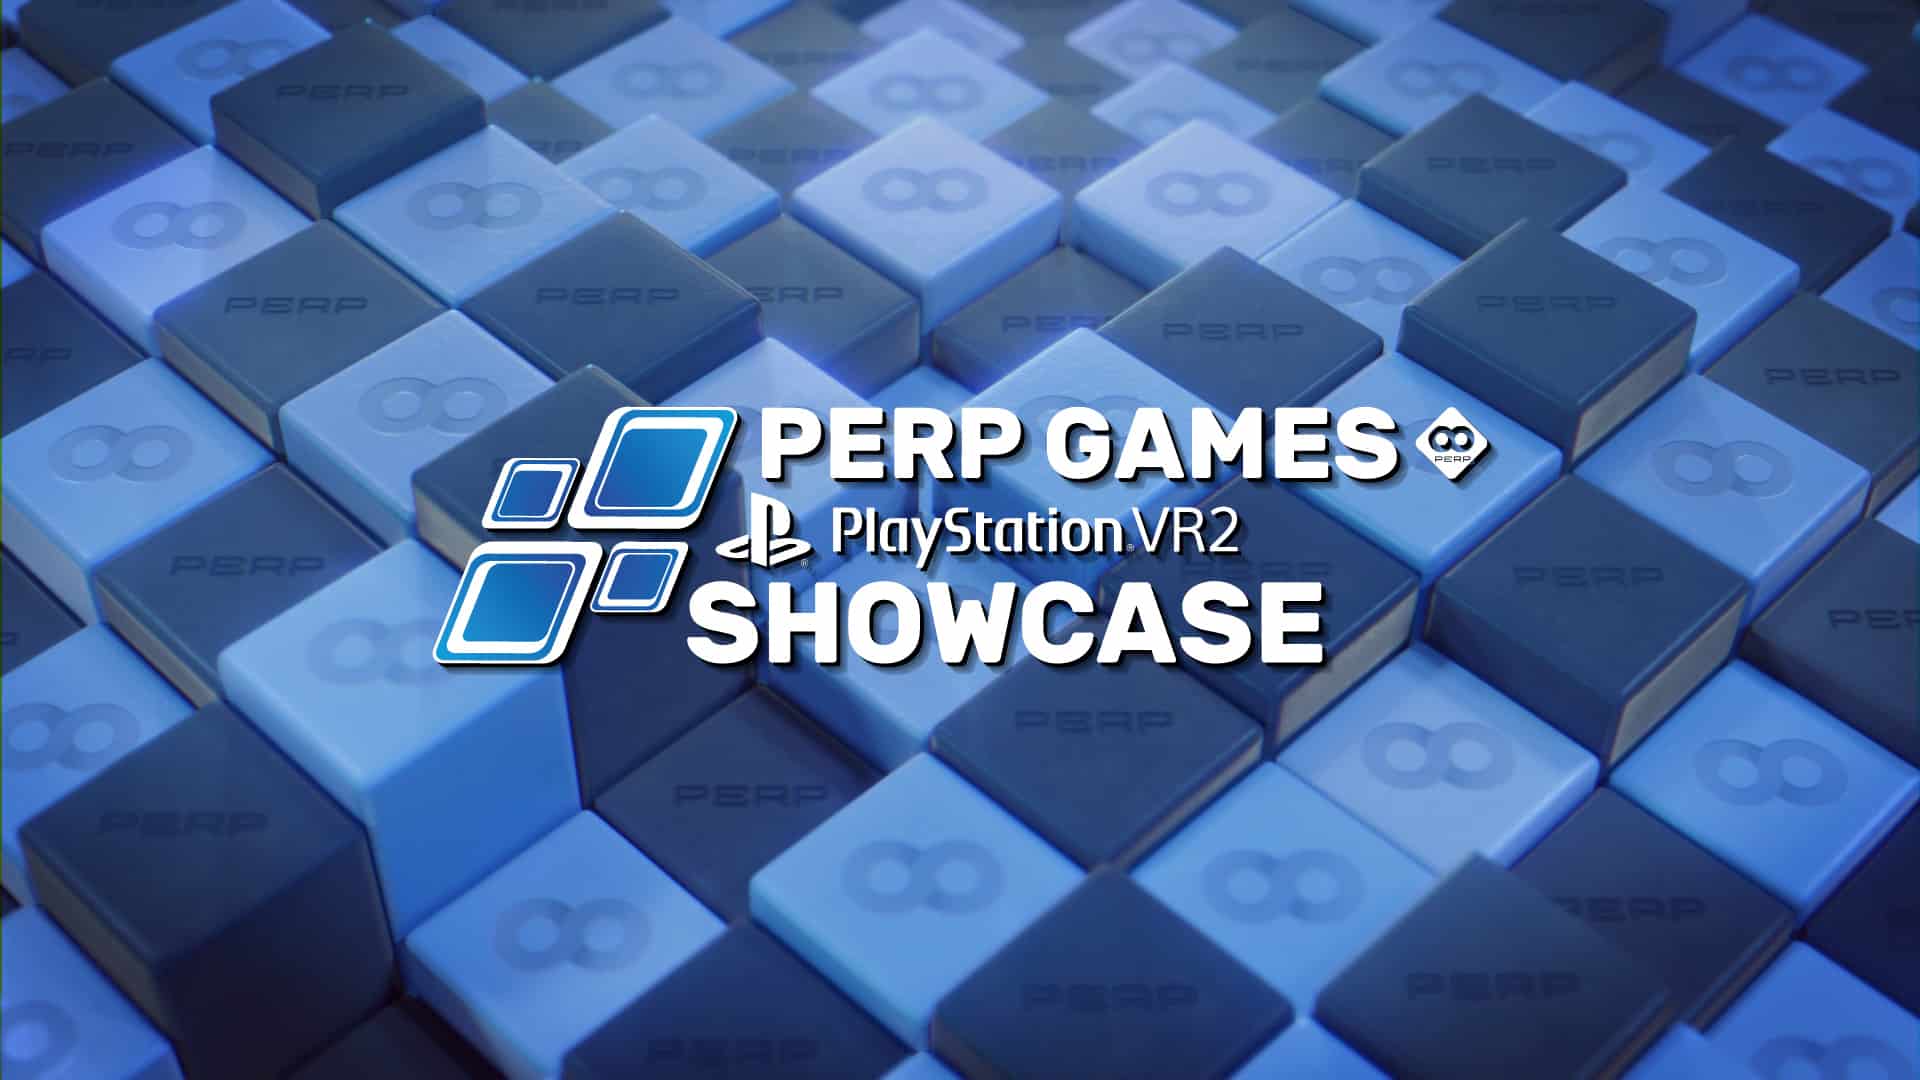 Perp Games ประกาศ PSVR 2 Showcase ในสัปดาห์หน้าพร้อมสัญญาว่าจะเปิดเผยใหม่